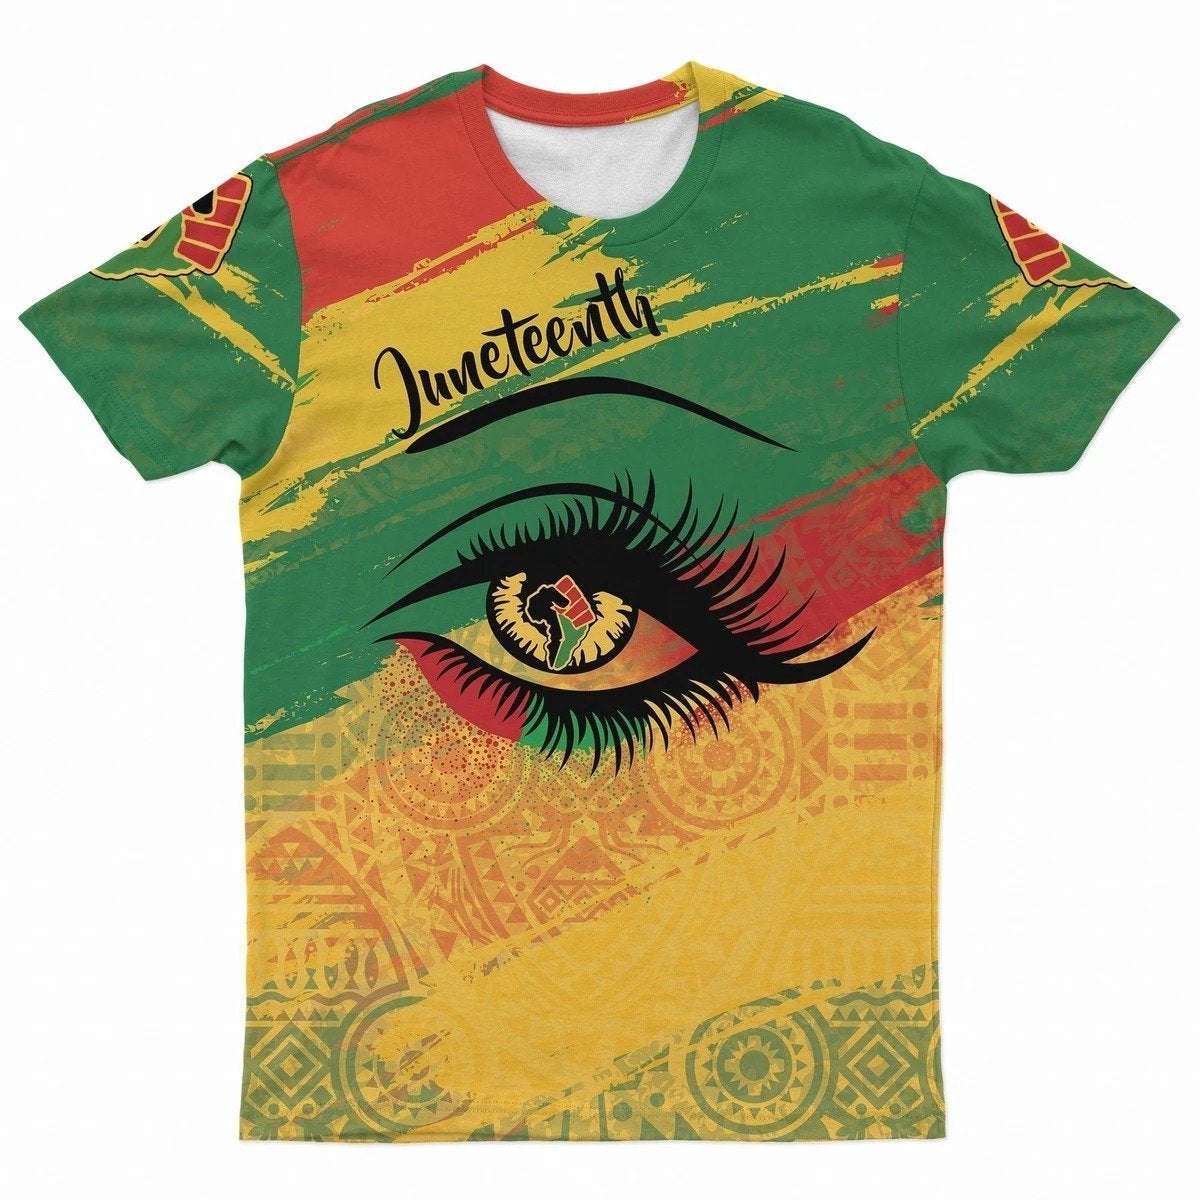 wonder-print-shop-t-shirt-juneteeth-eye-t-shirt